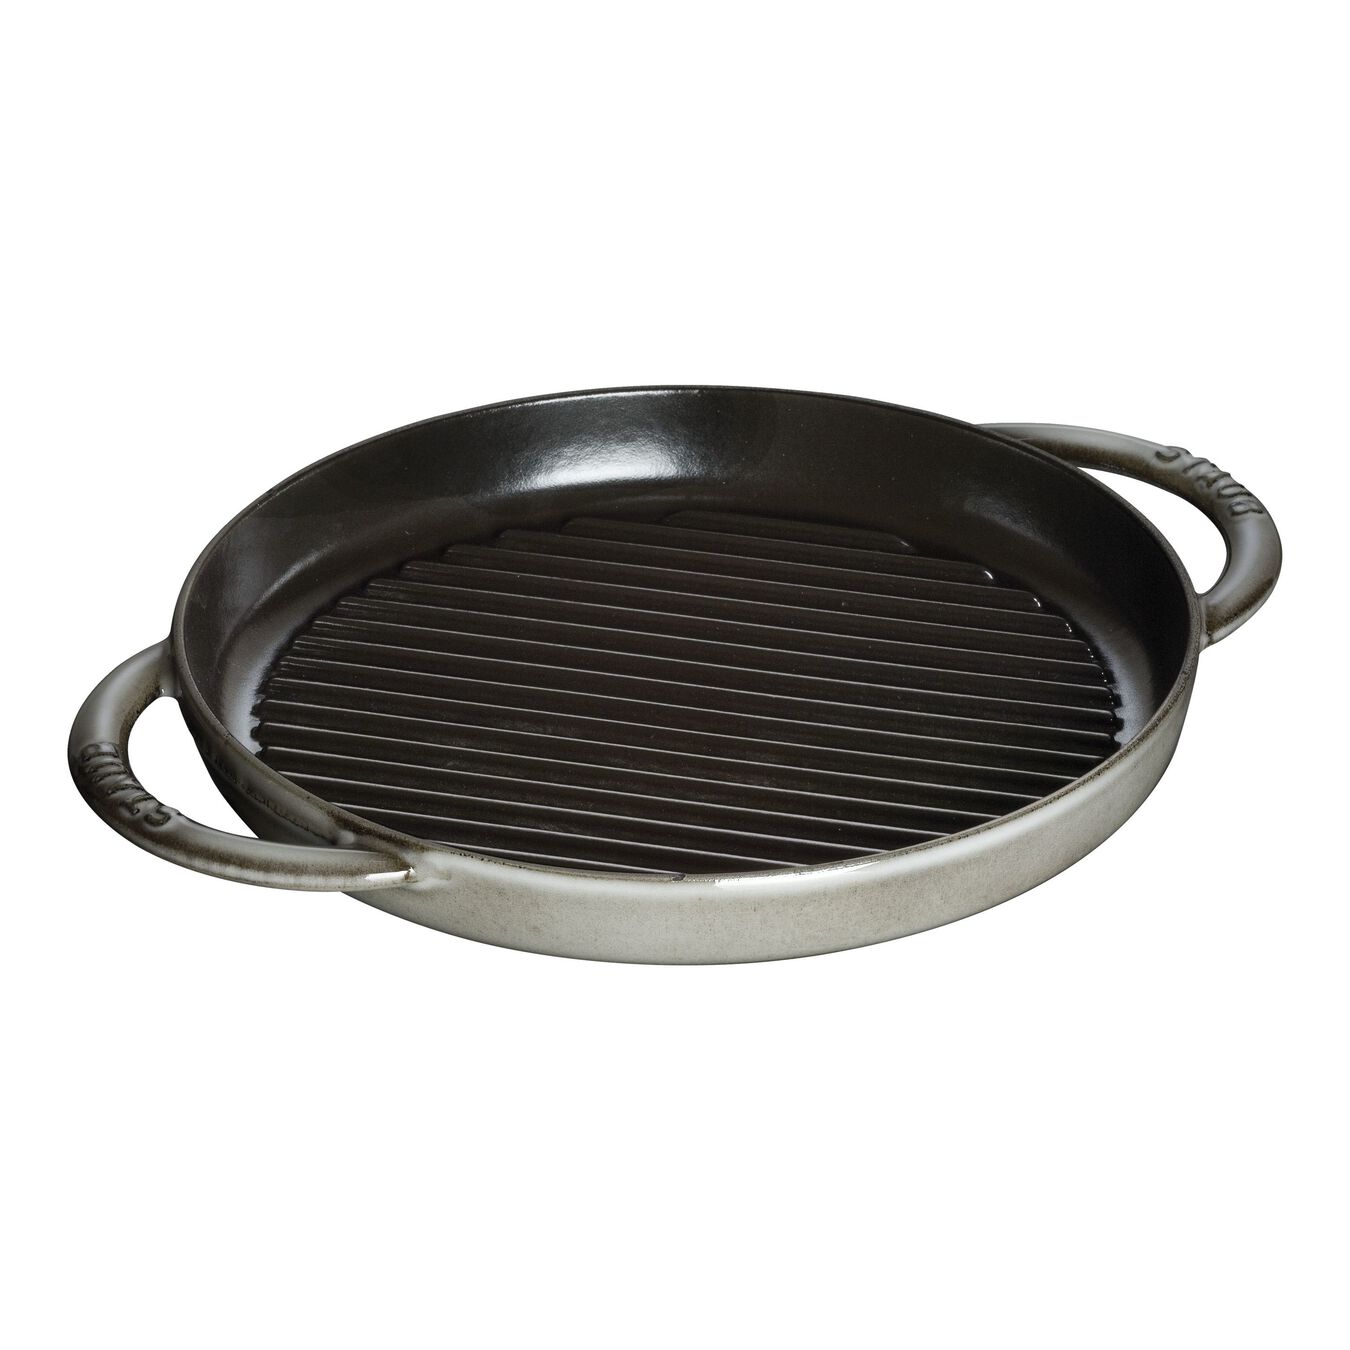 26 cm round Cast iron Pure Grill graphite-grey,,large 1